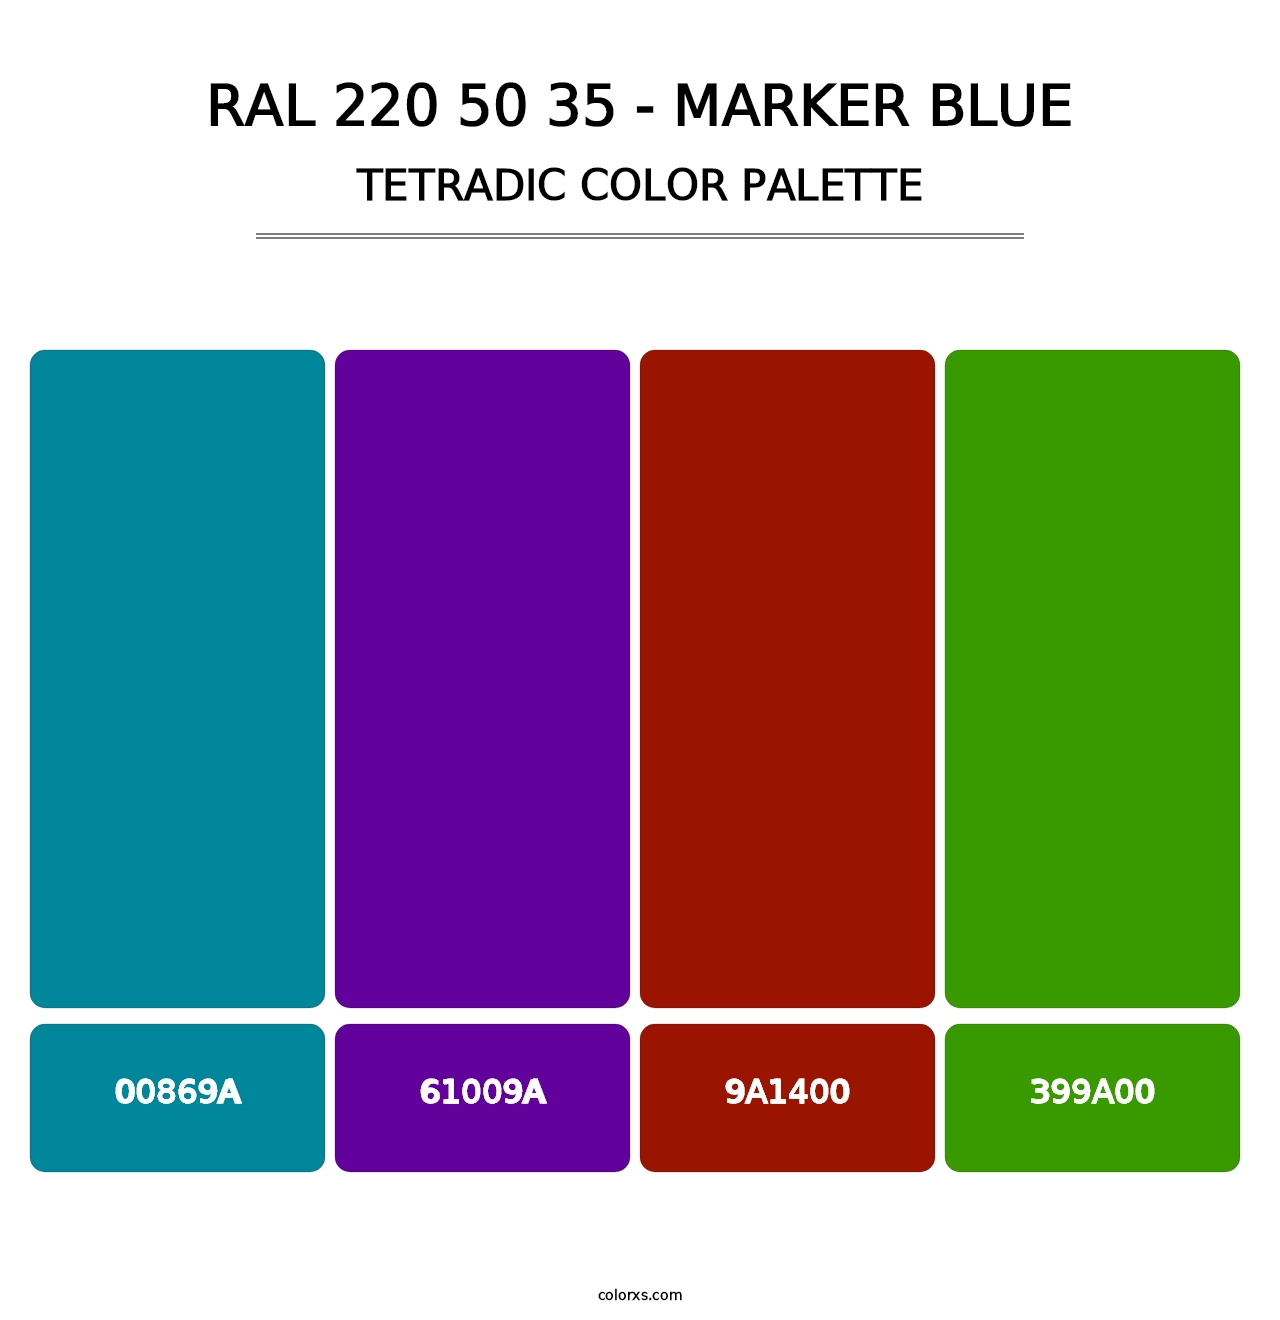 RAL 220 50 35 - Marker Blue - Tetradic Color Palette